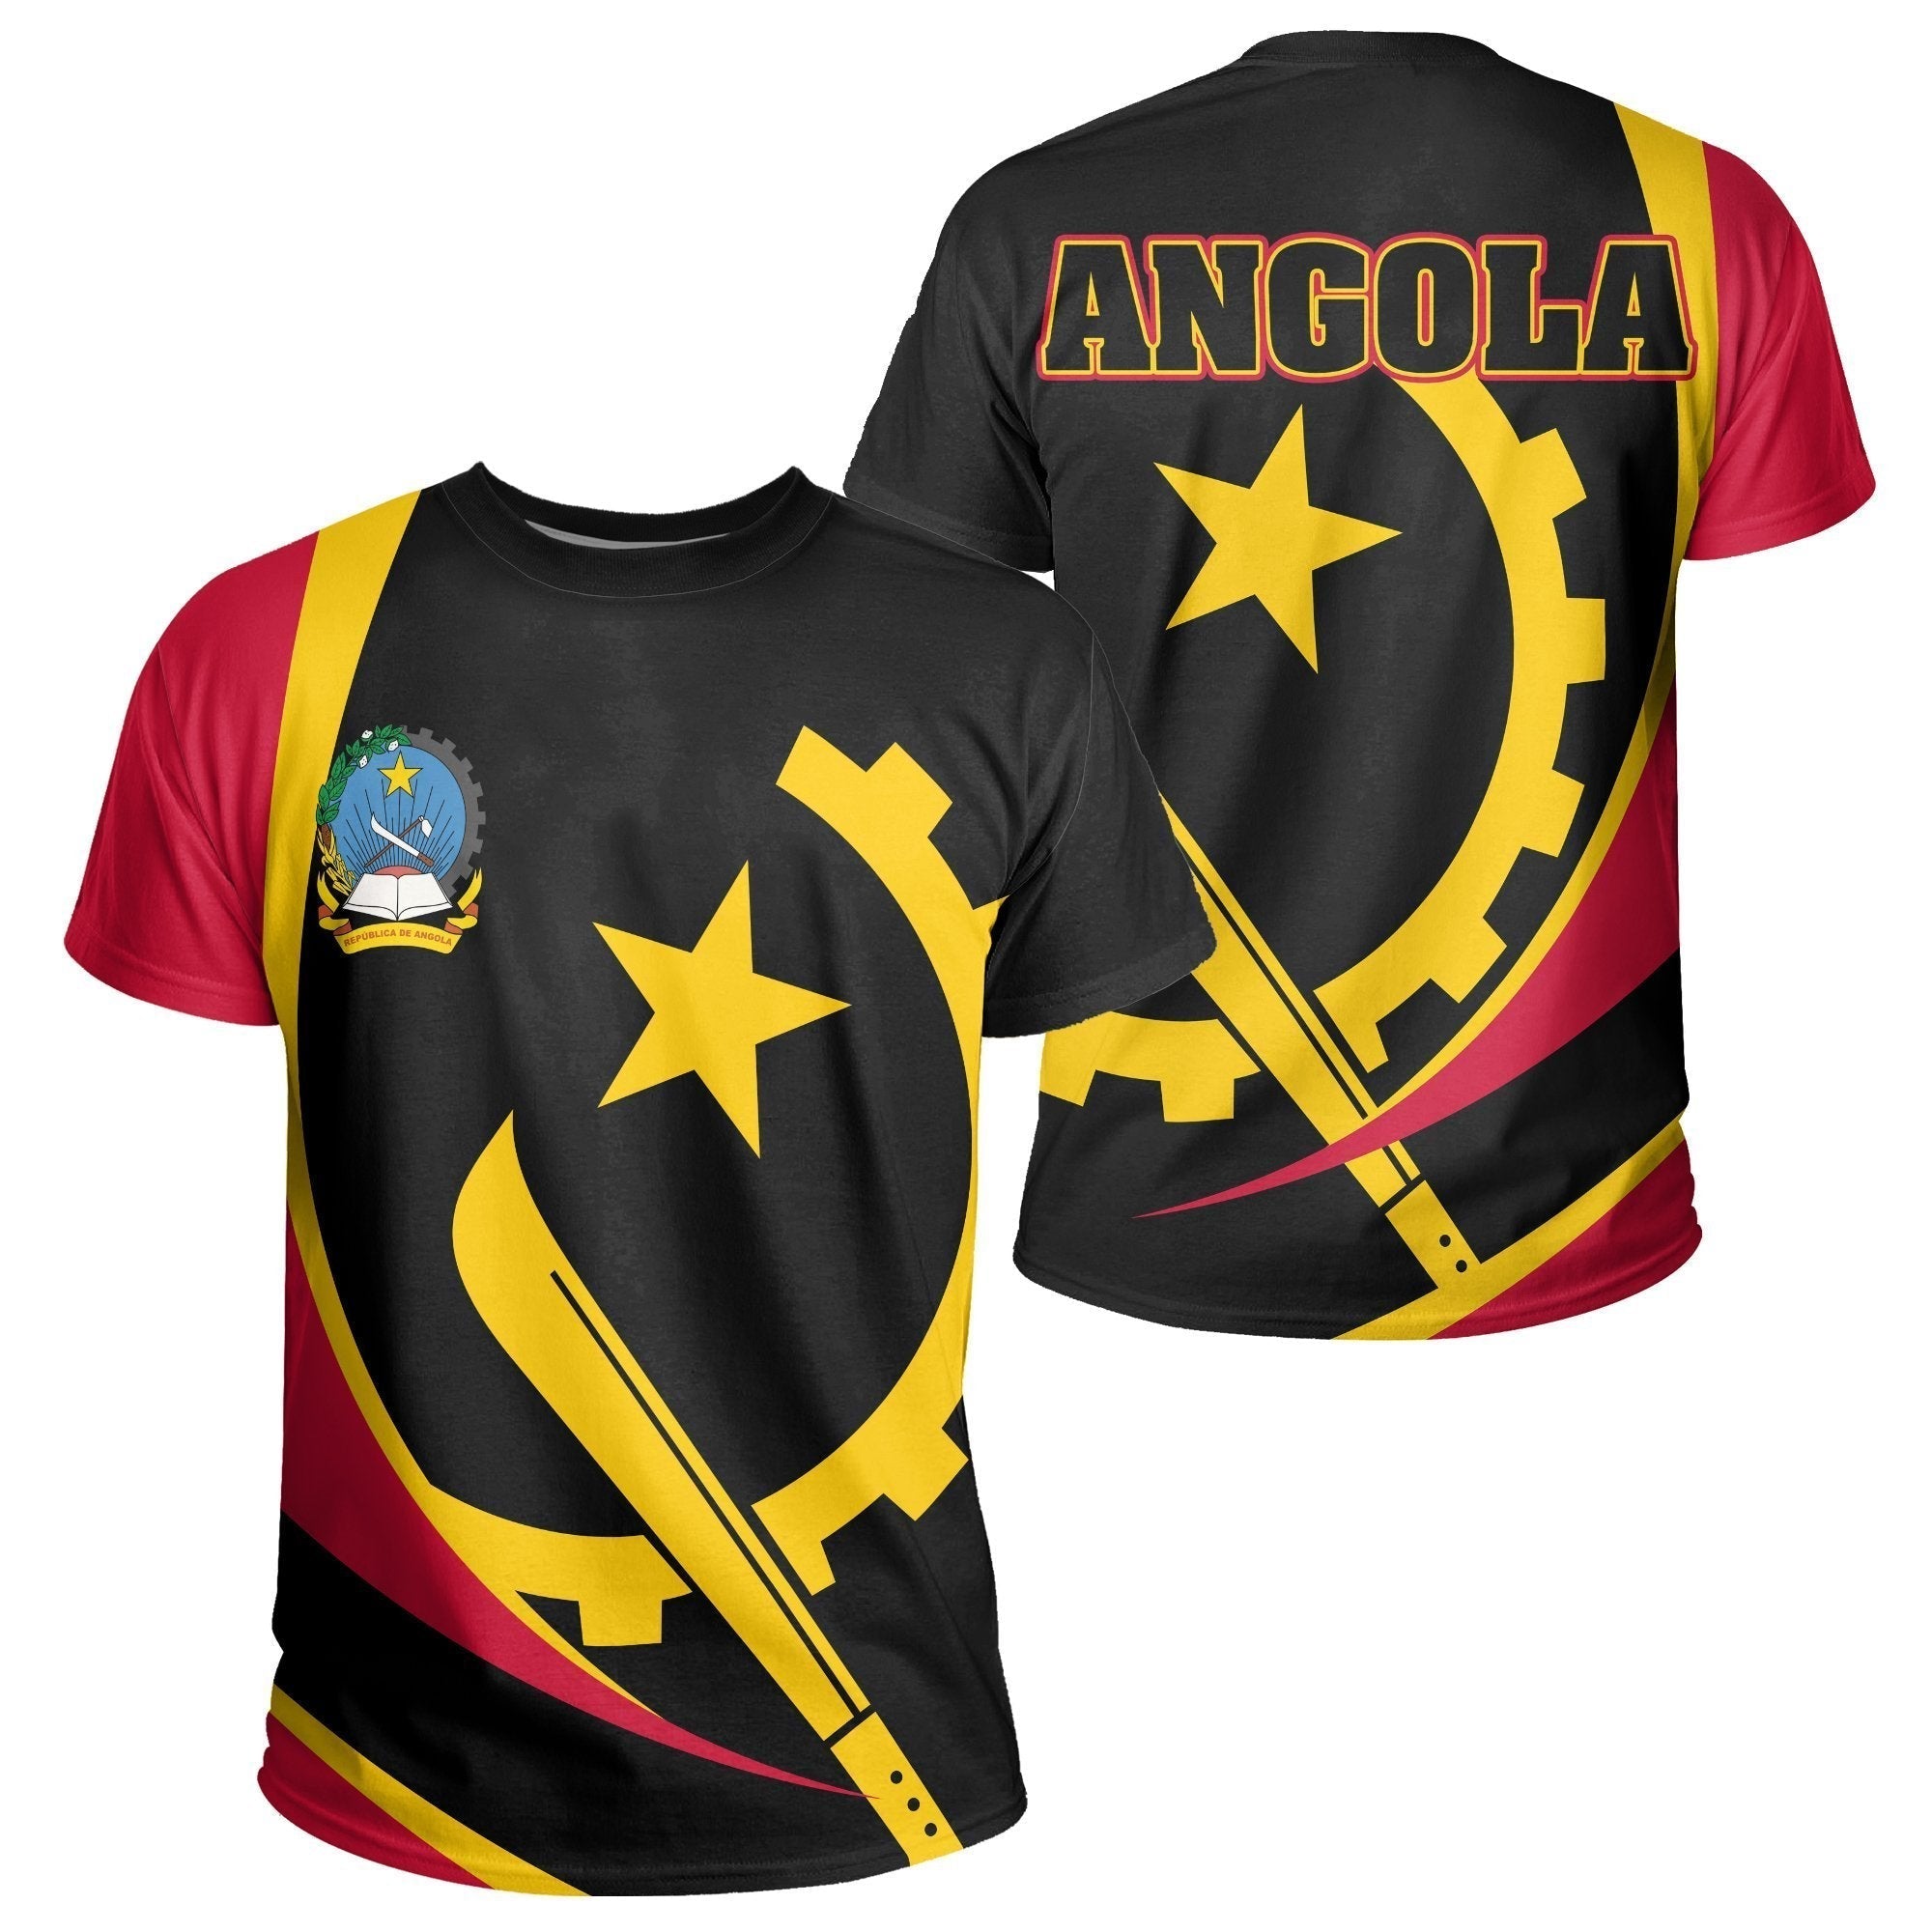 wonder-print-shop-t-shirt-angola-arch-style-tee